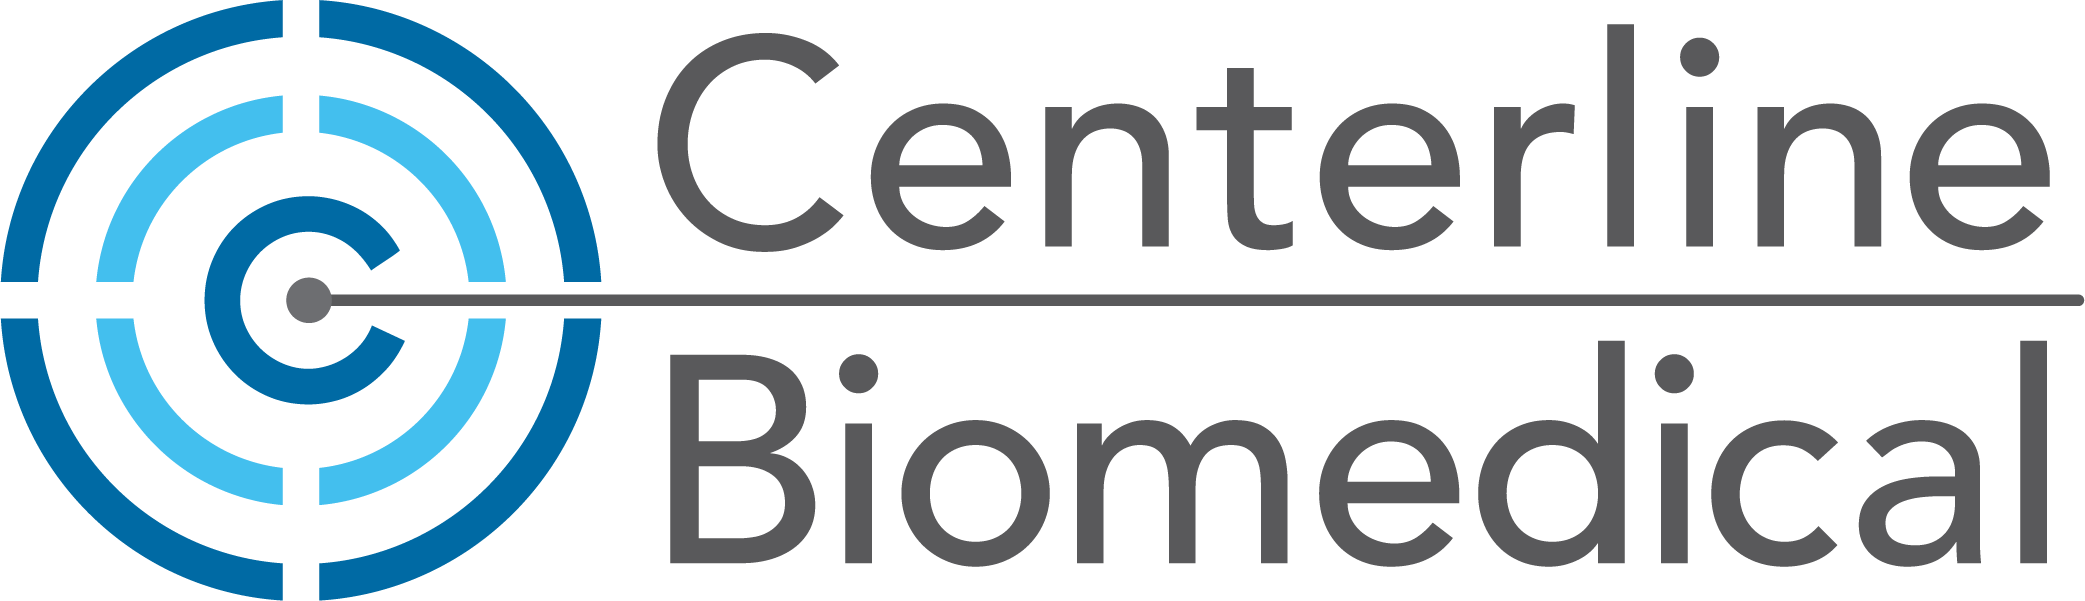 Centerline Biomedical, Inc. Company Logo